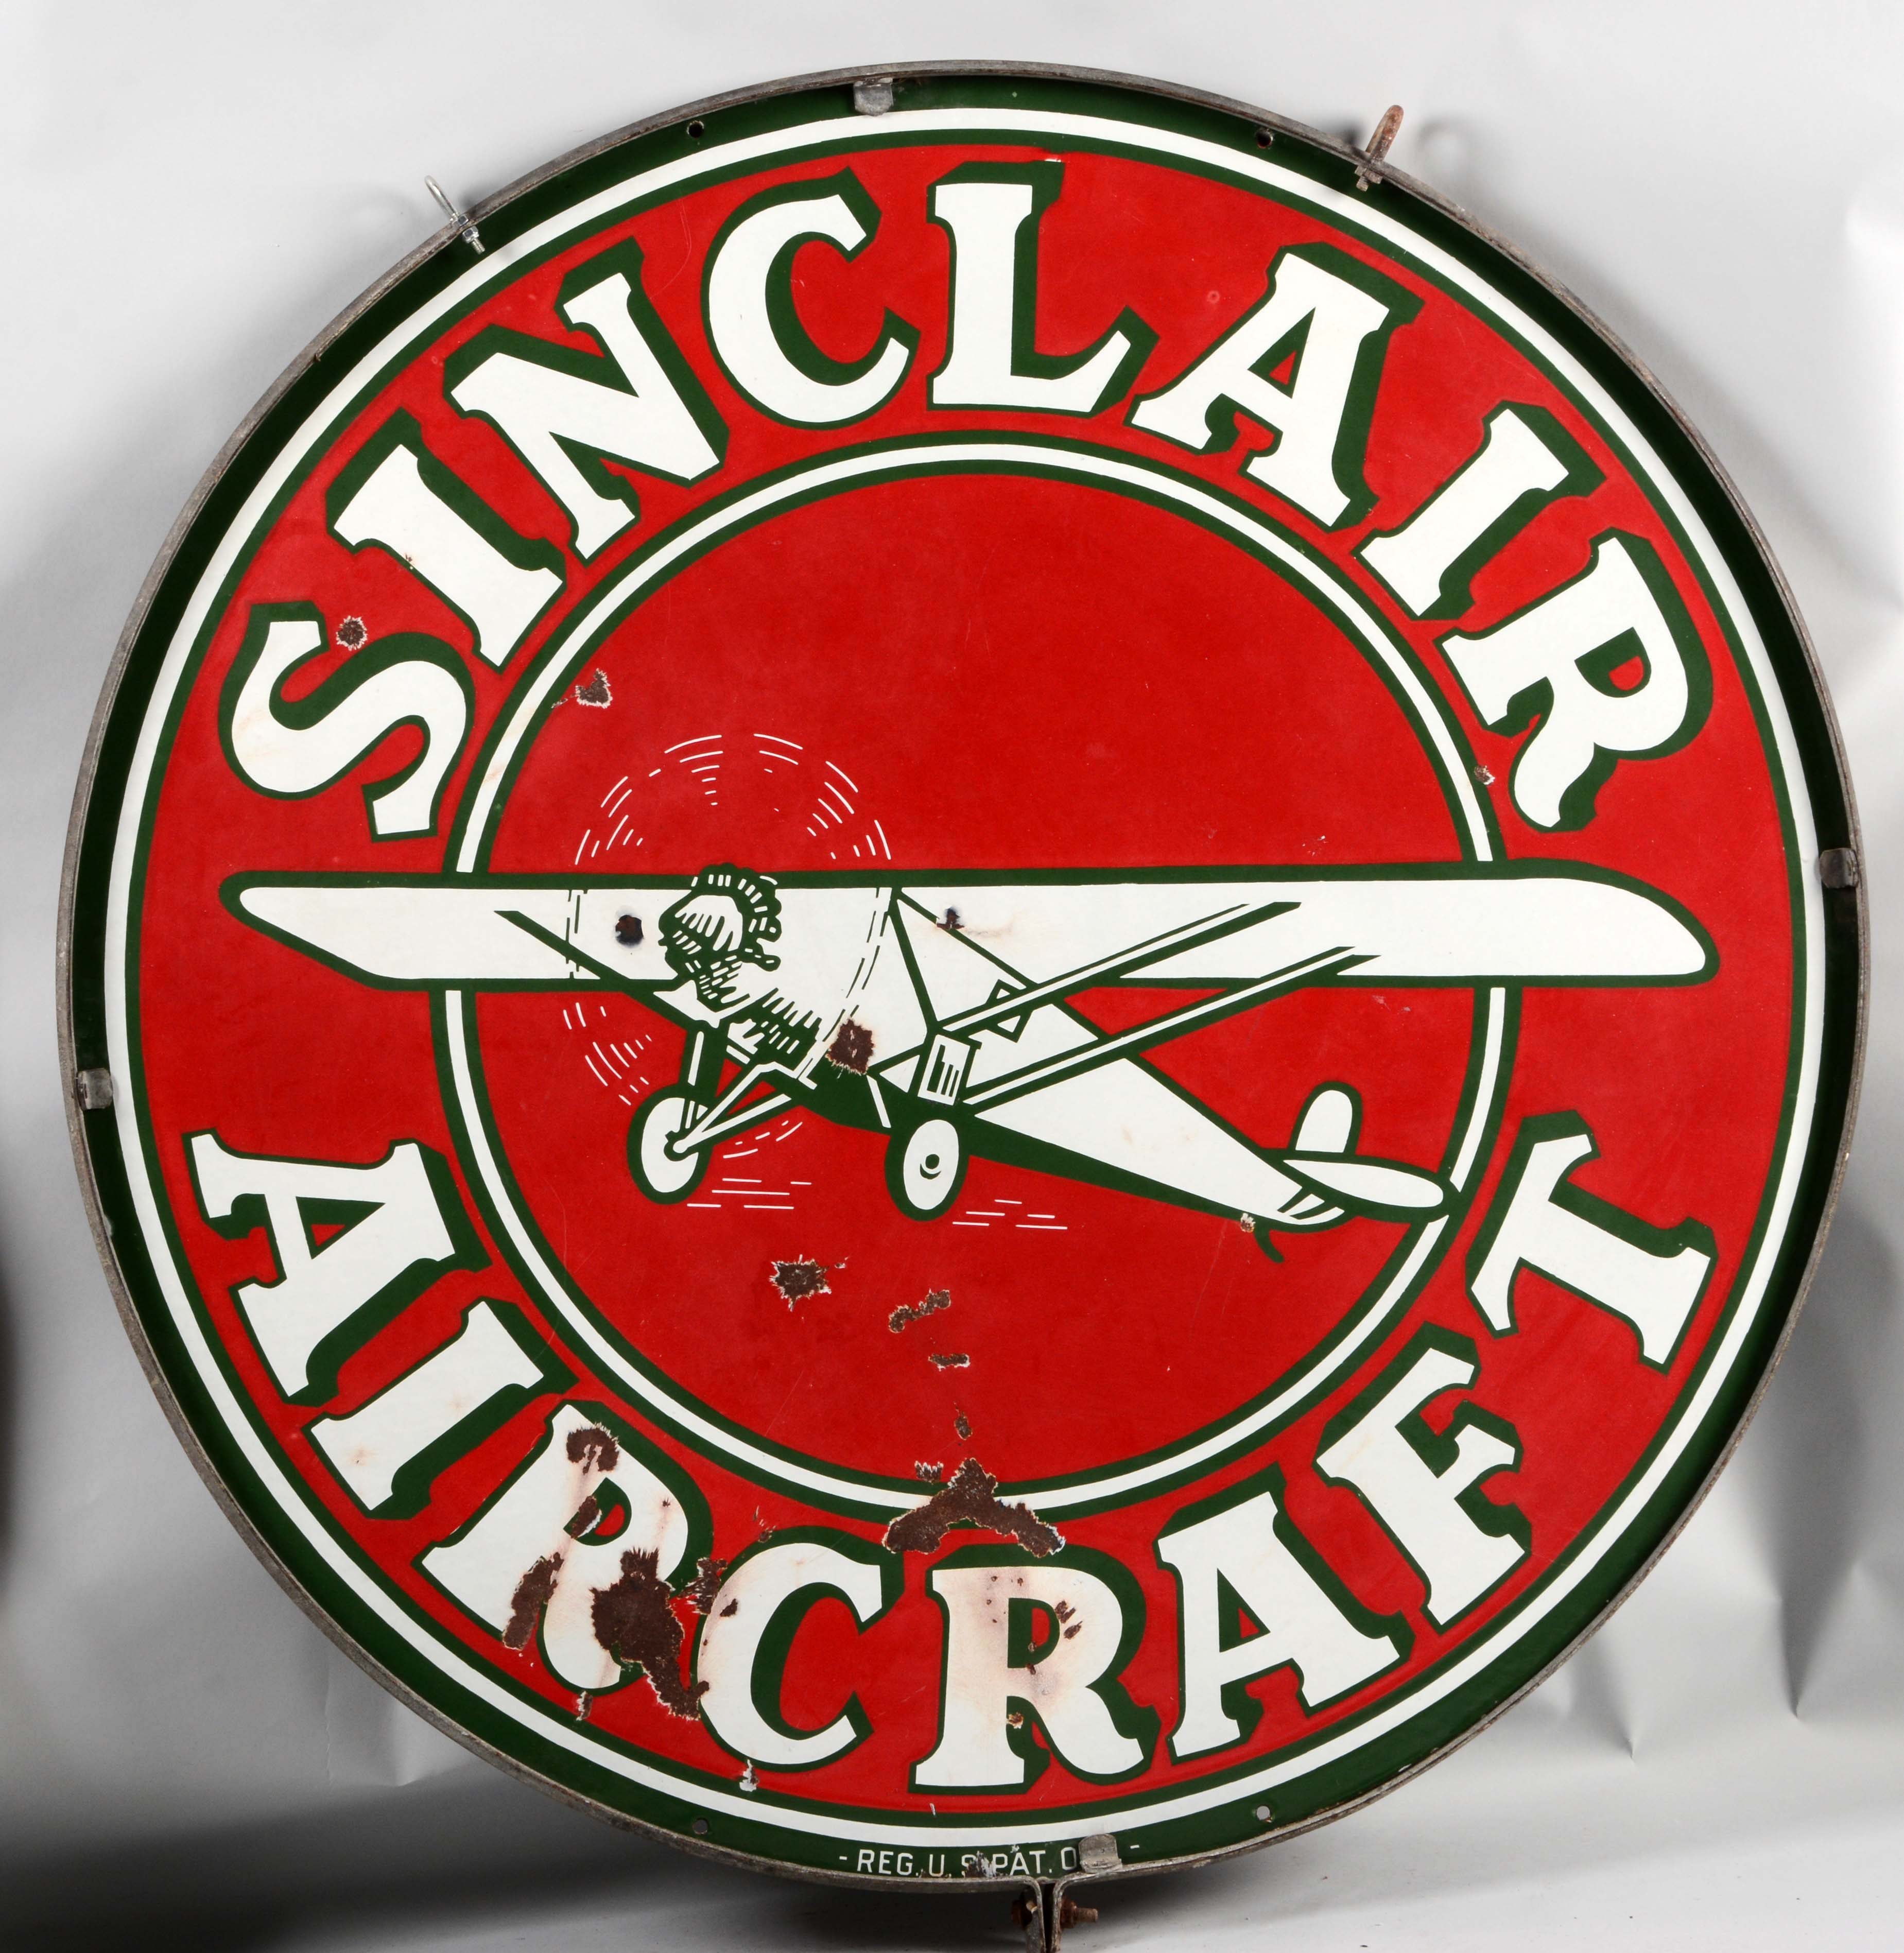 Sinclair Aircraft Porcelain Sign, estimated at $7,500-12,500.